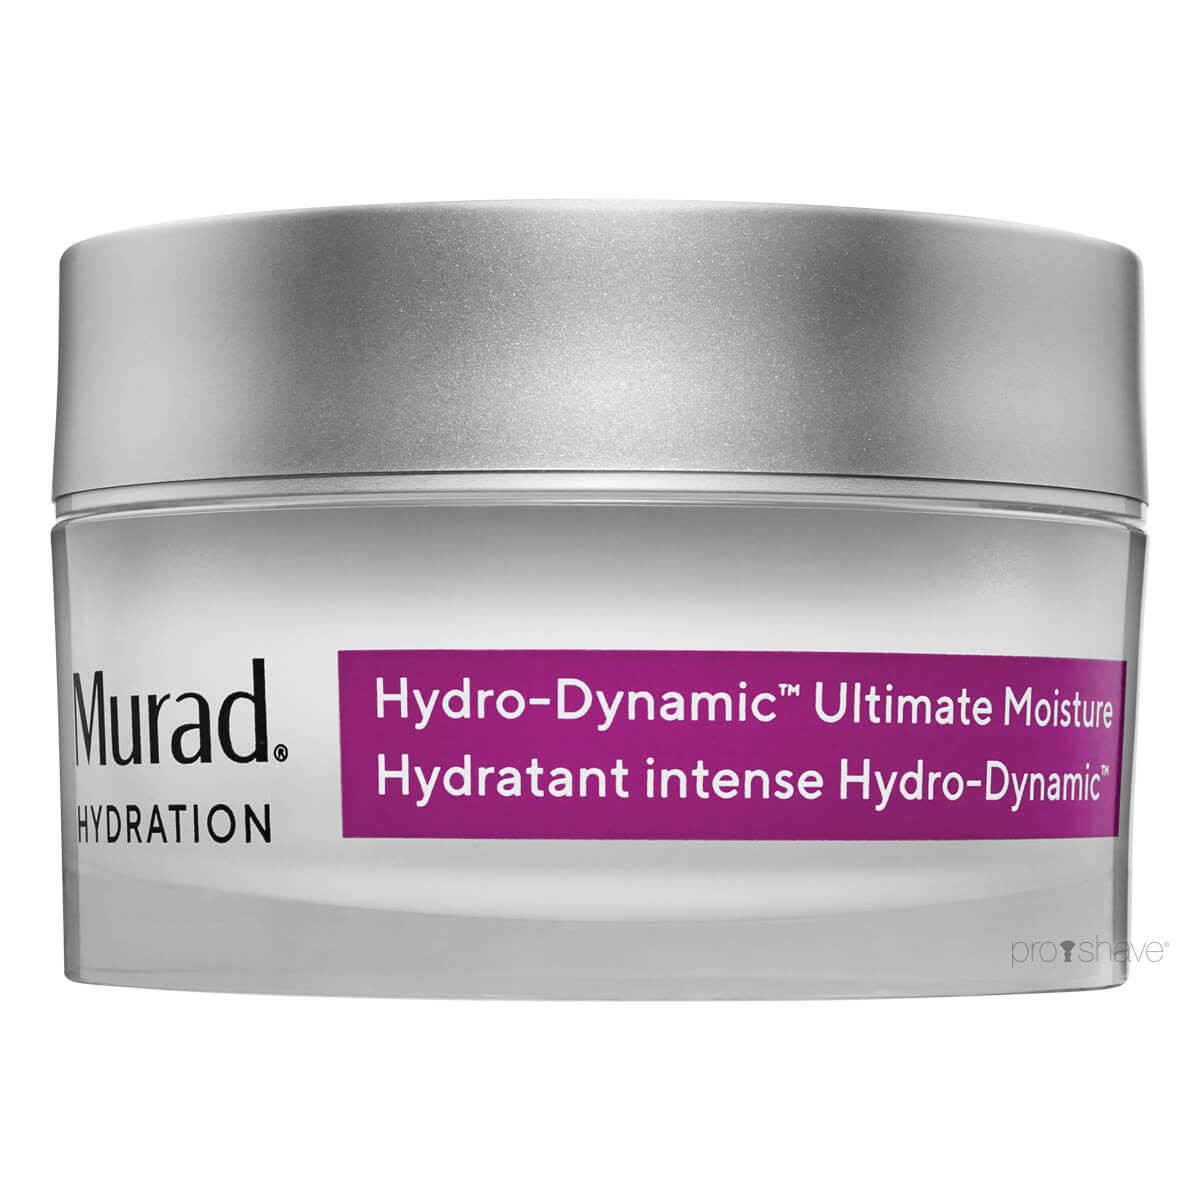 Billede af Murad Hydro-Dynamic Ultimate Moisture, Hydration, 50 ml. hos Proshave